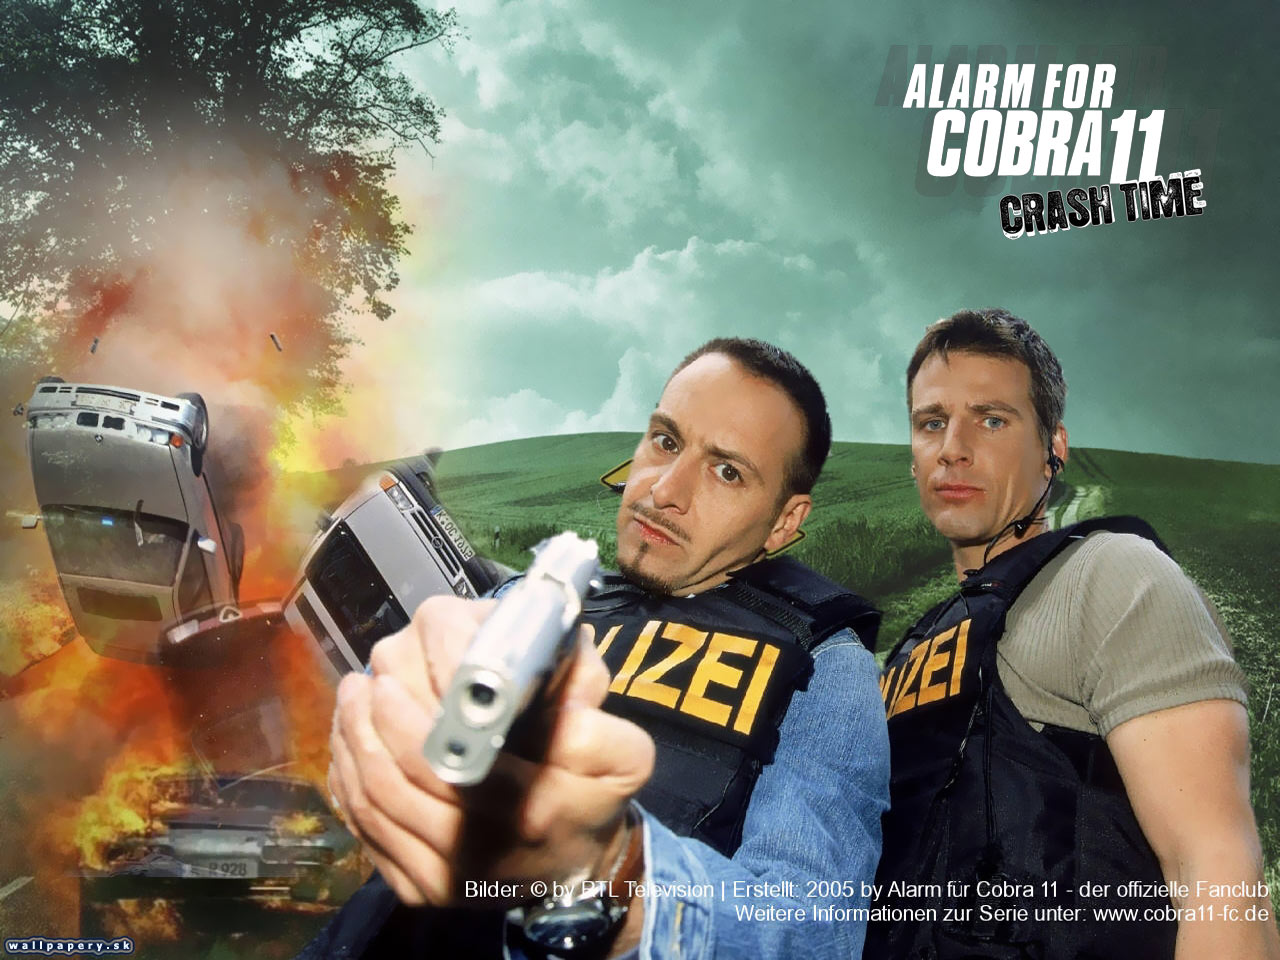 Alarm for Cobra 11: Crash Time - wallpaper 2